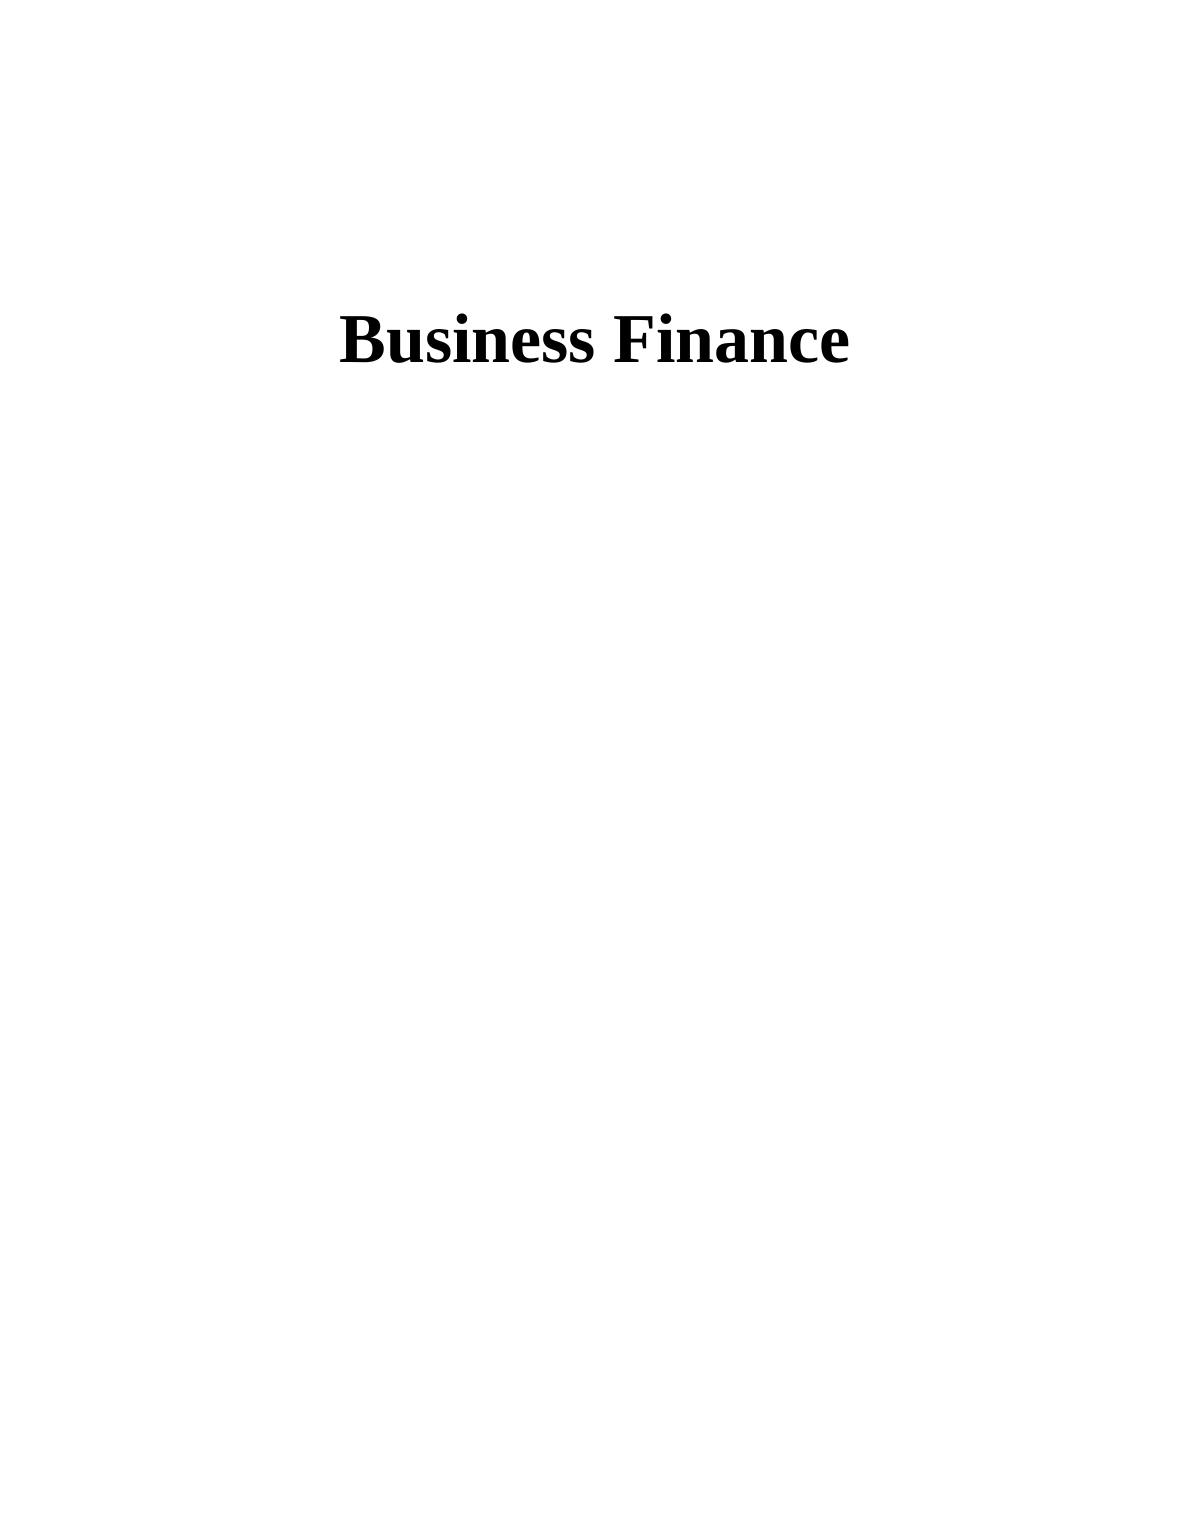 Business Finance EXECUTIVE SUMMARY_1